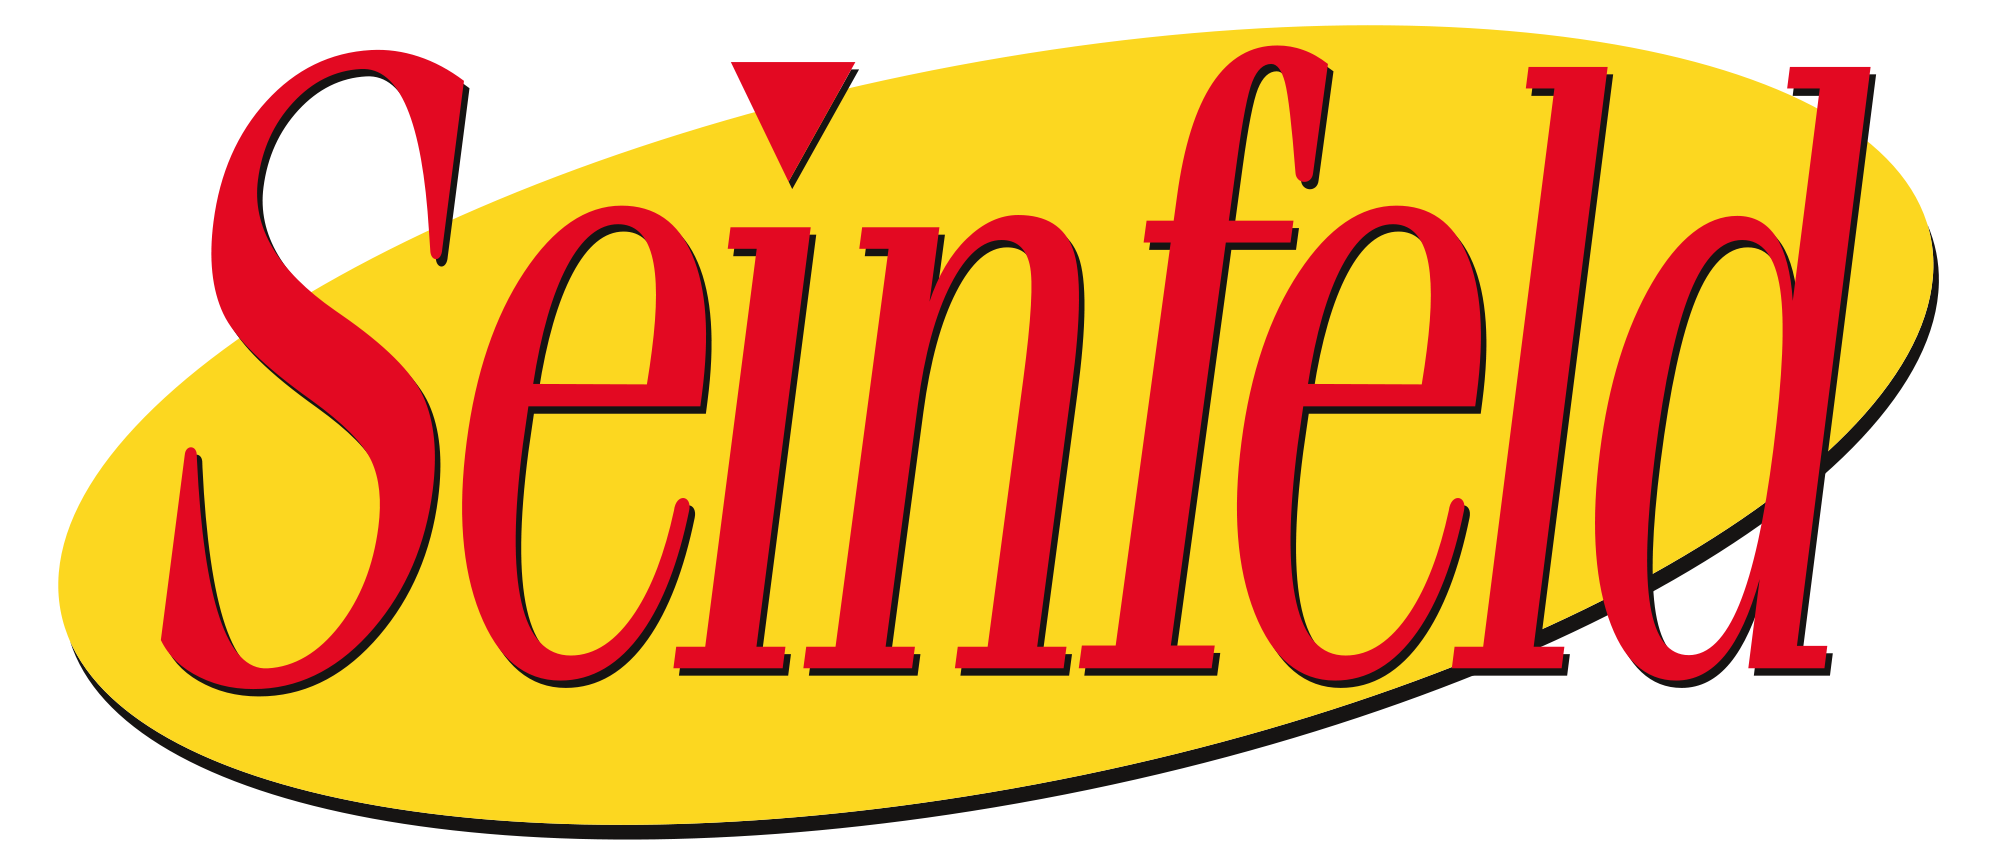 Seinfeld_English_logo.png